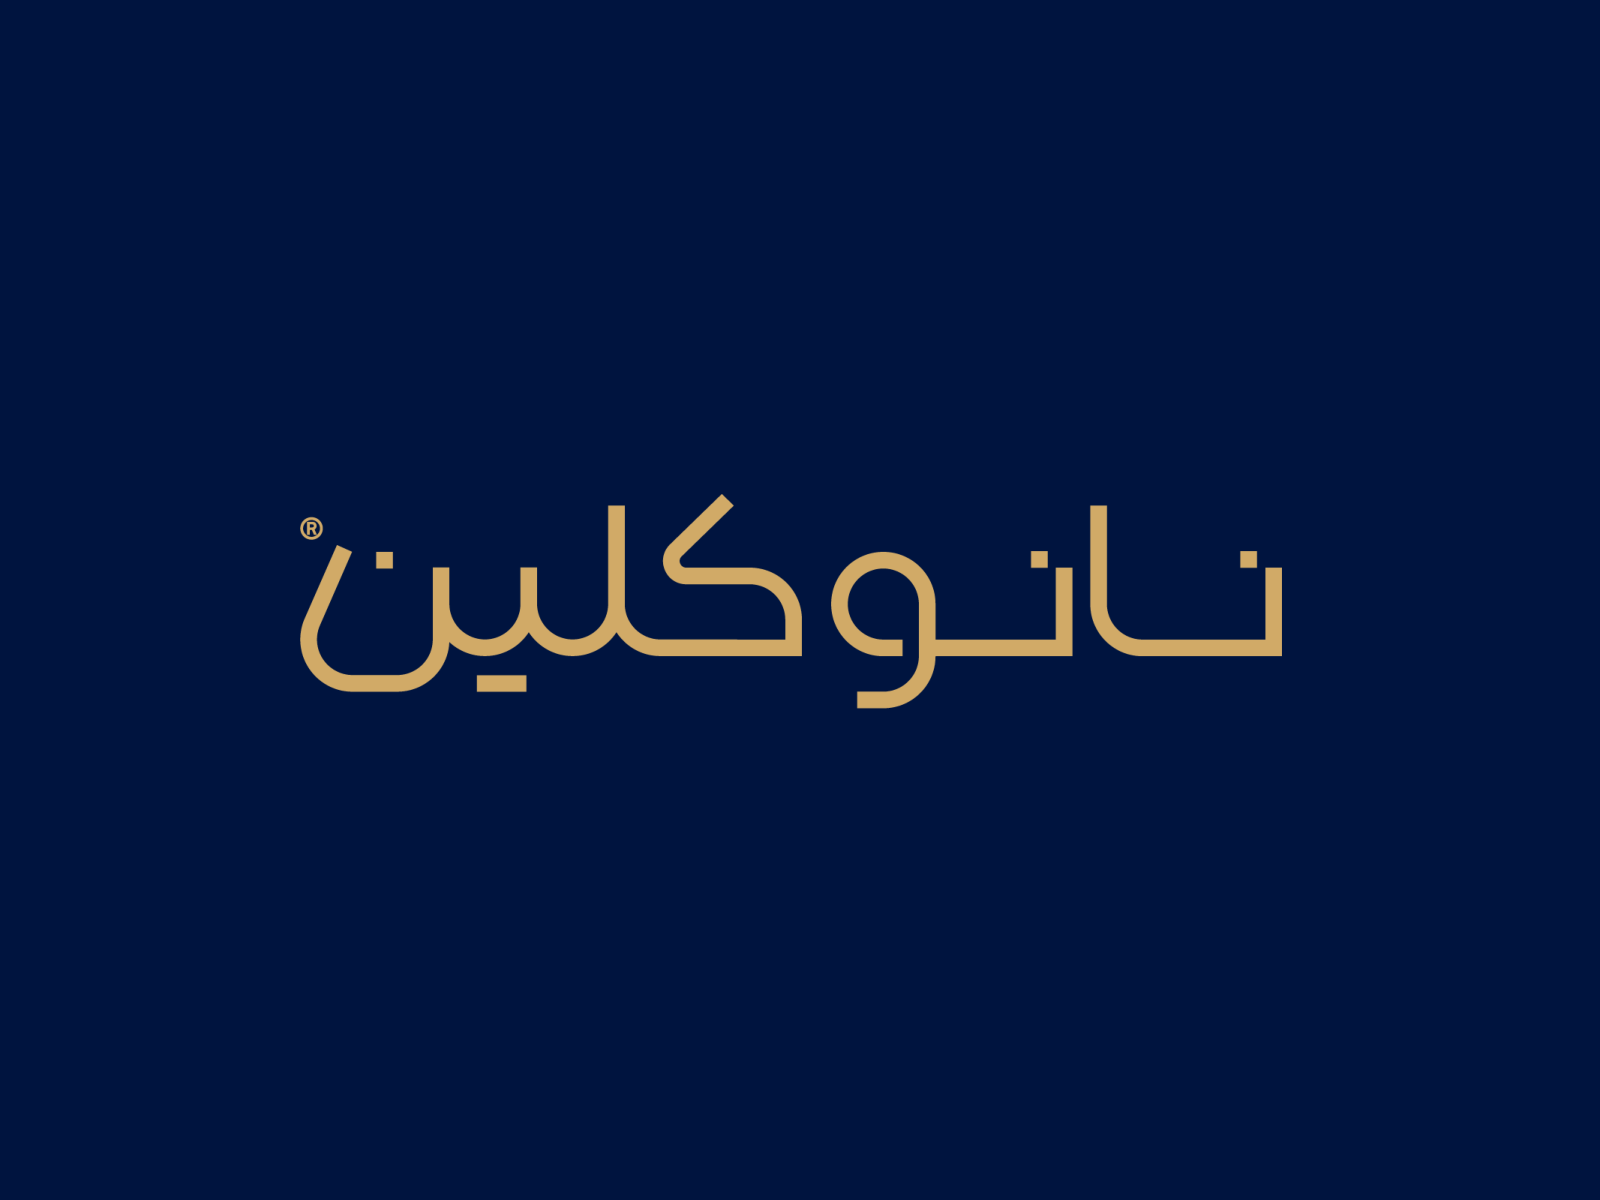 Nano Clean Logo Design | Persian | 2020 by Tayyari on Dribbble